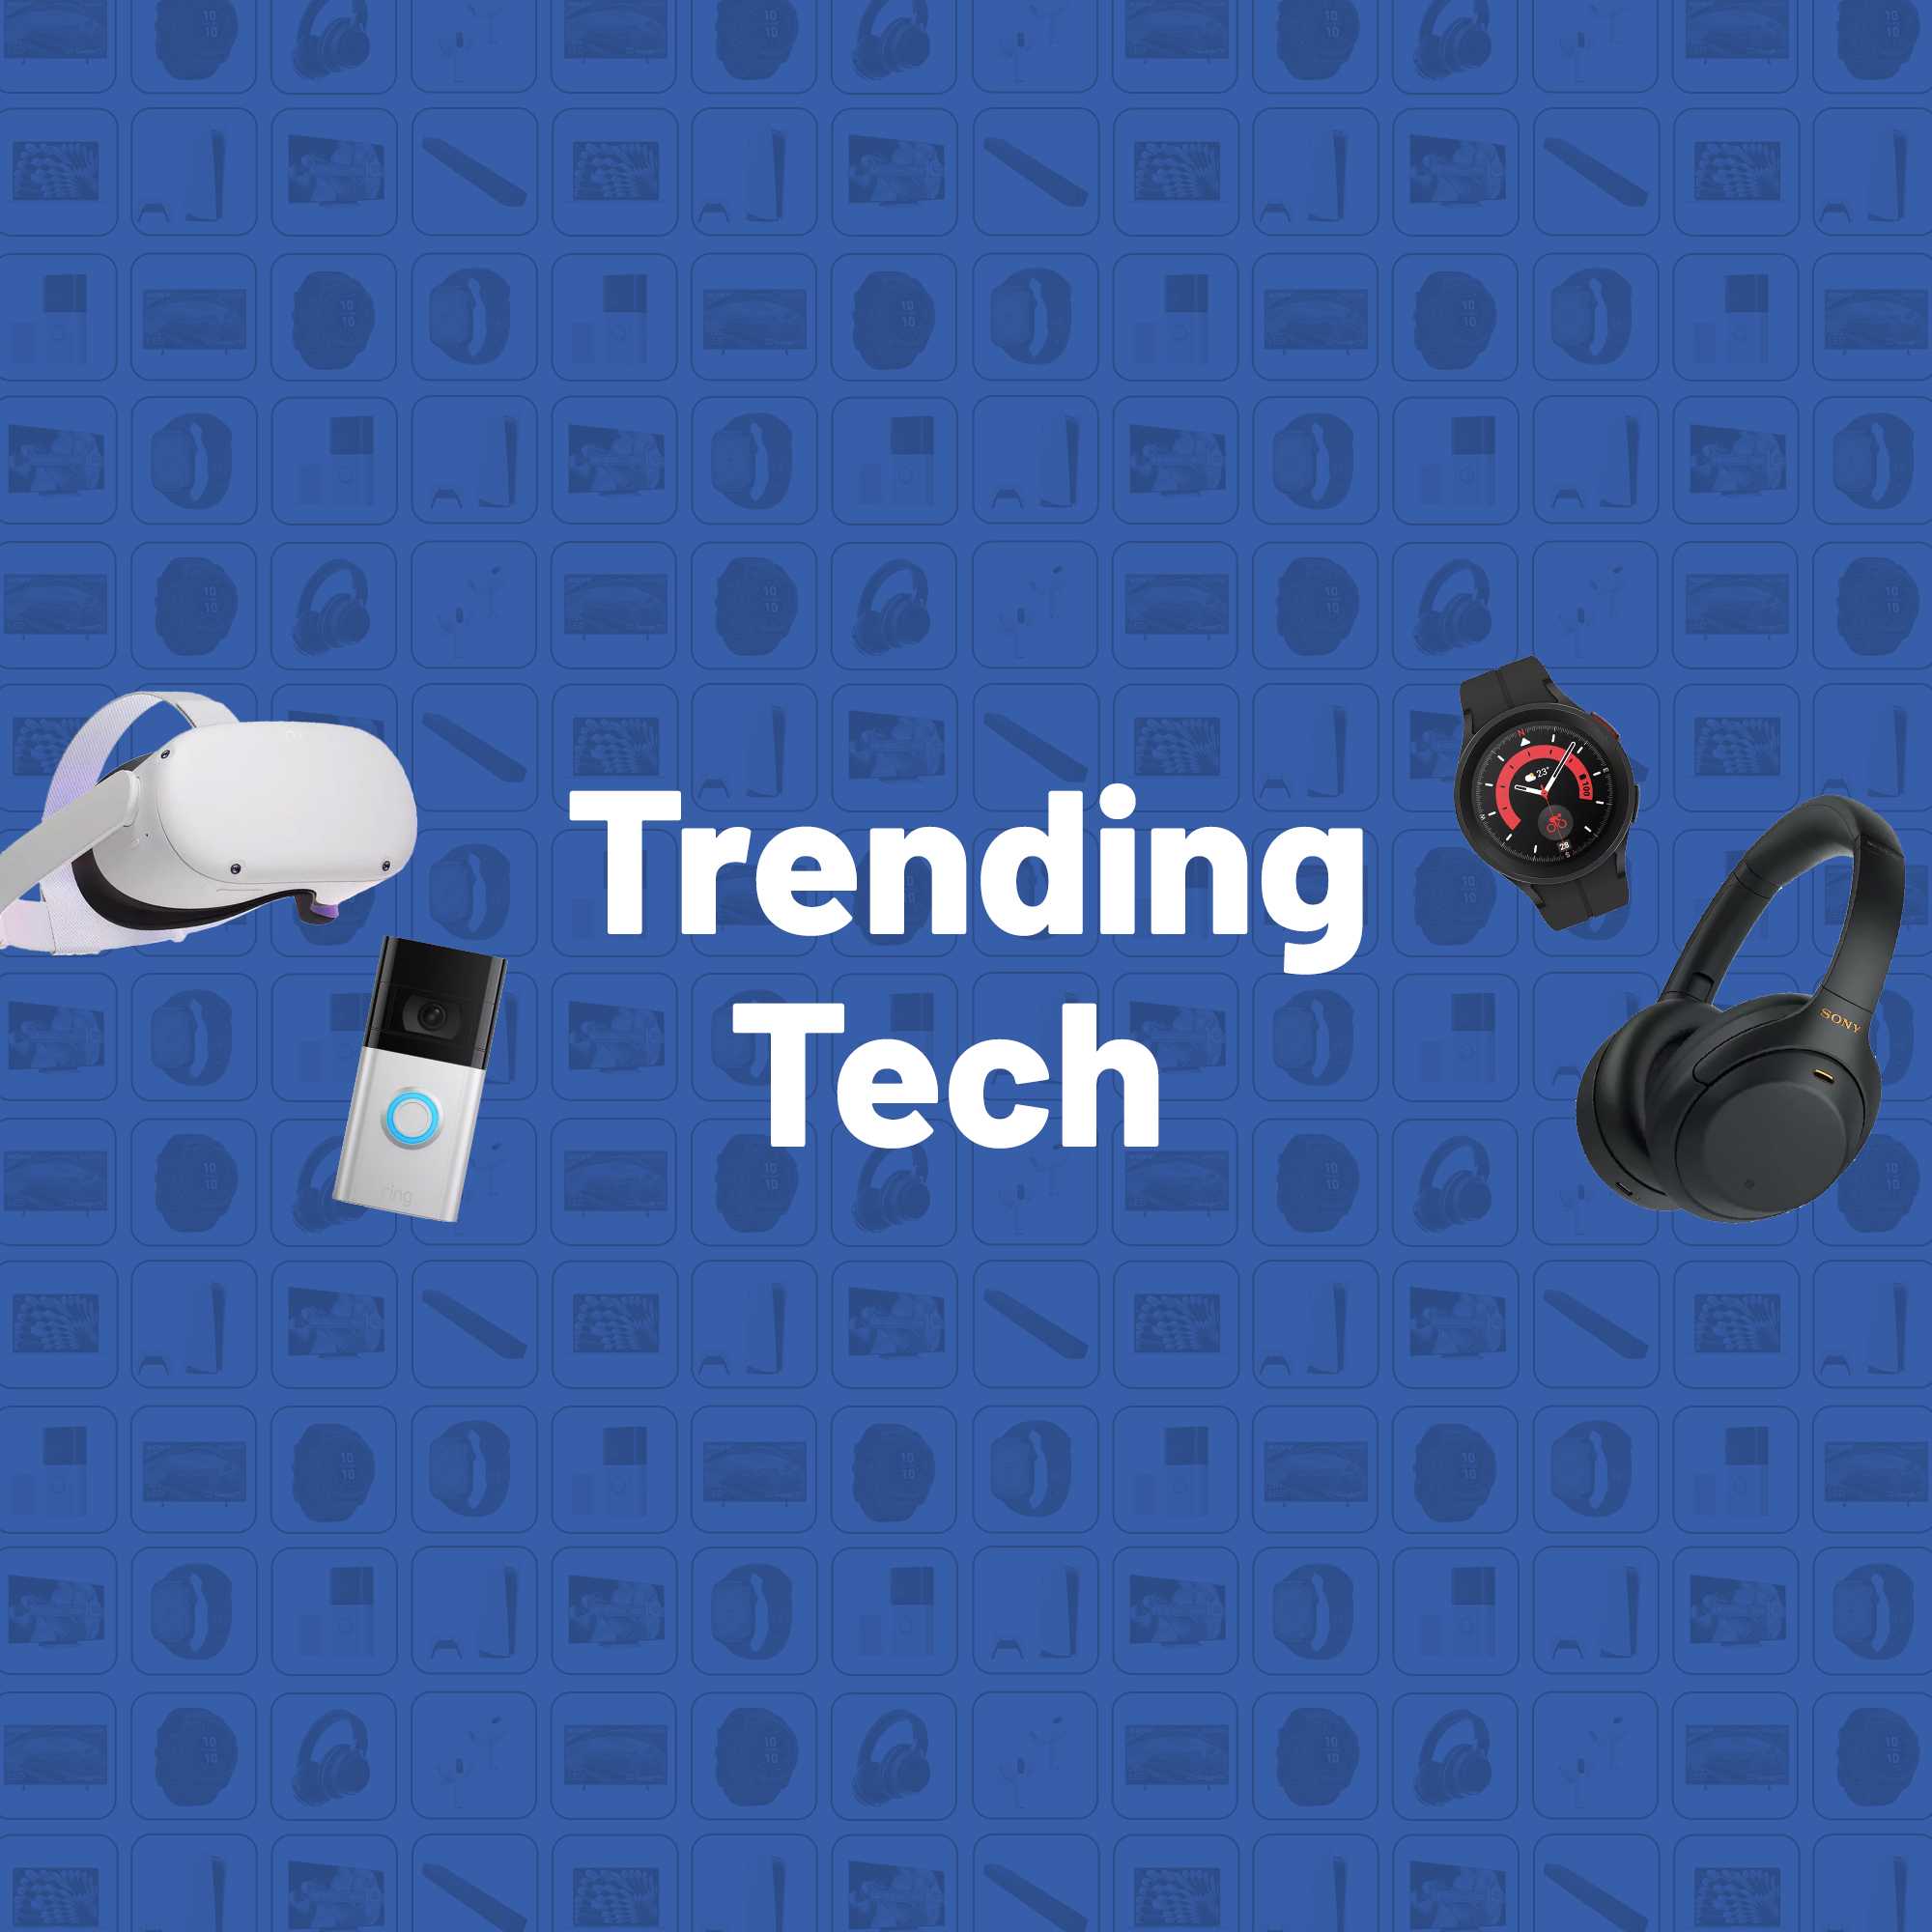 Trending Tech. Great gadgets here for the taking. Big brands, huge range, fancy features.